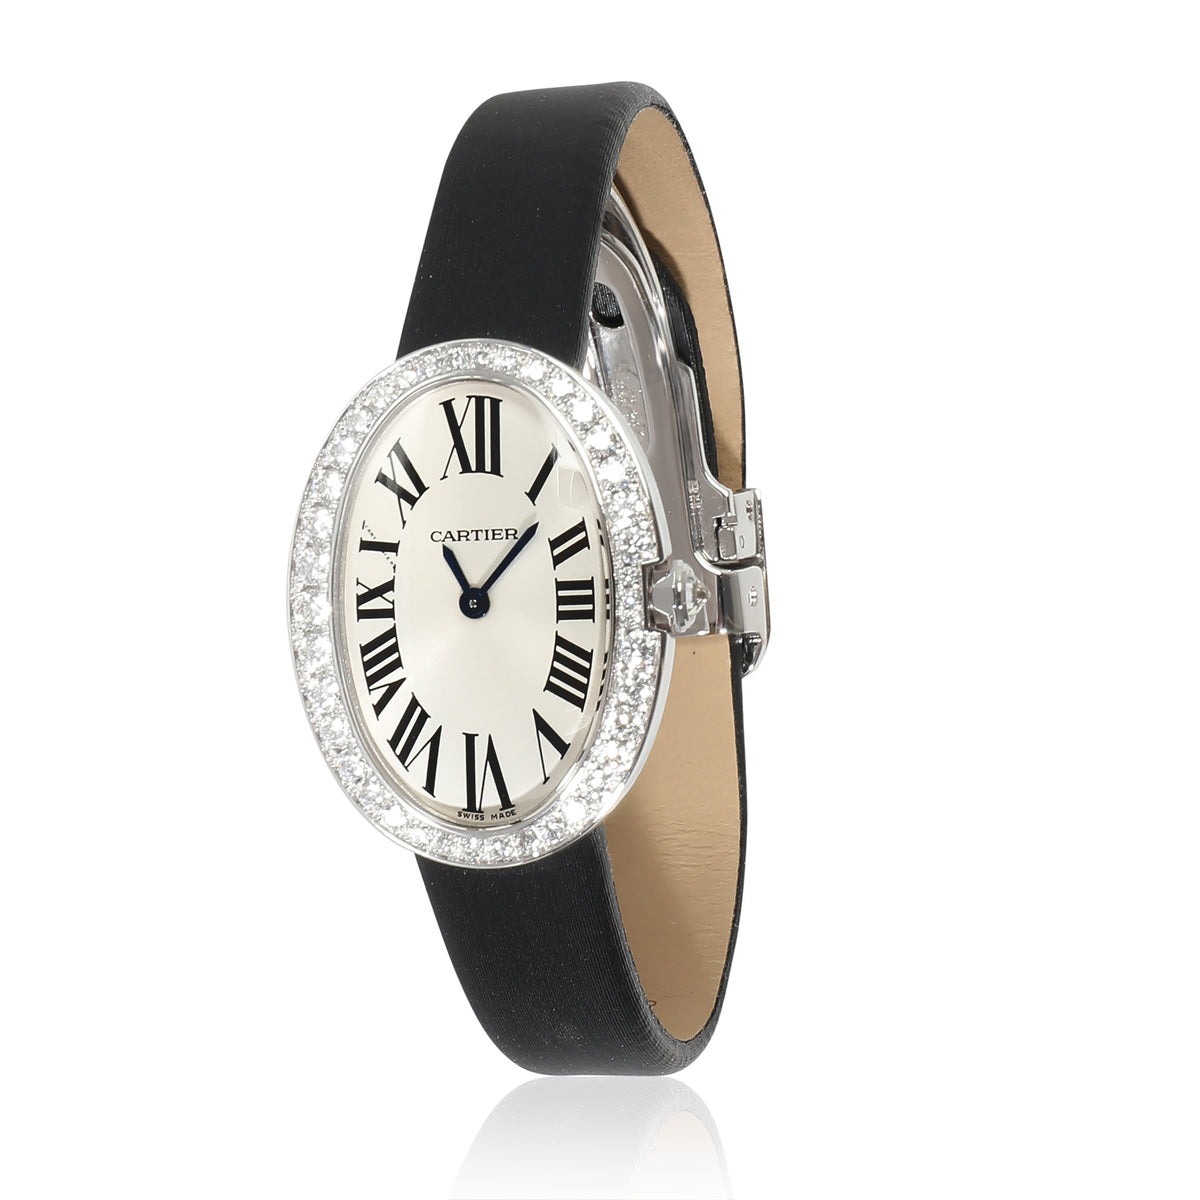 Baignoire WB520027 Women's Watch in 18kt White Gold